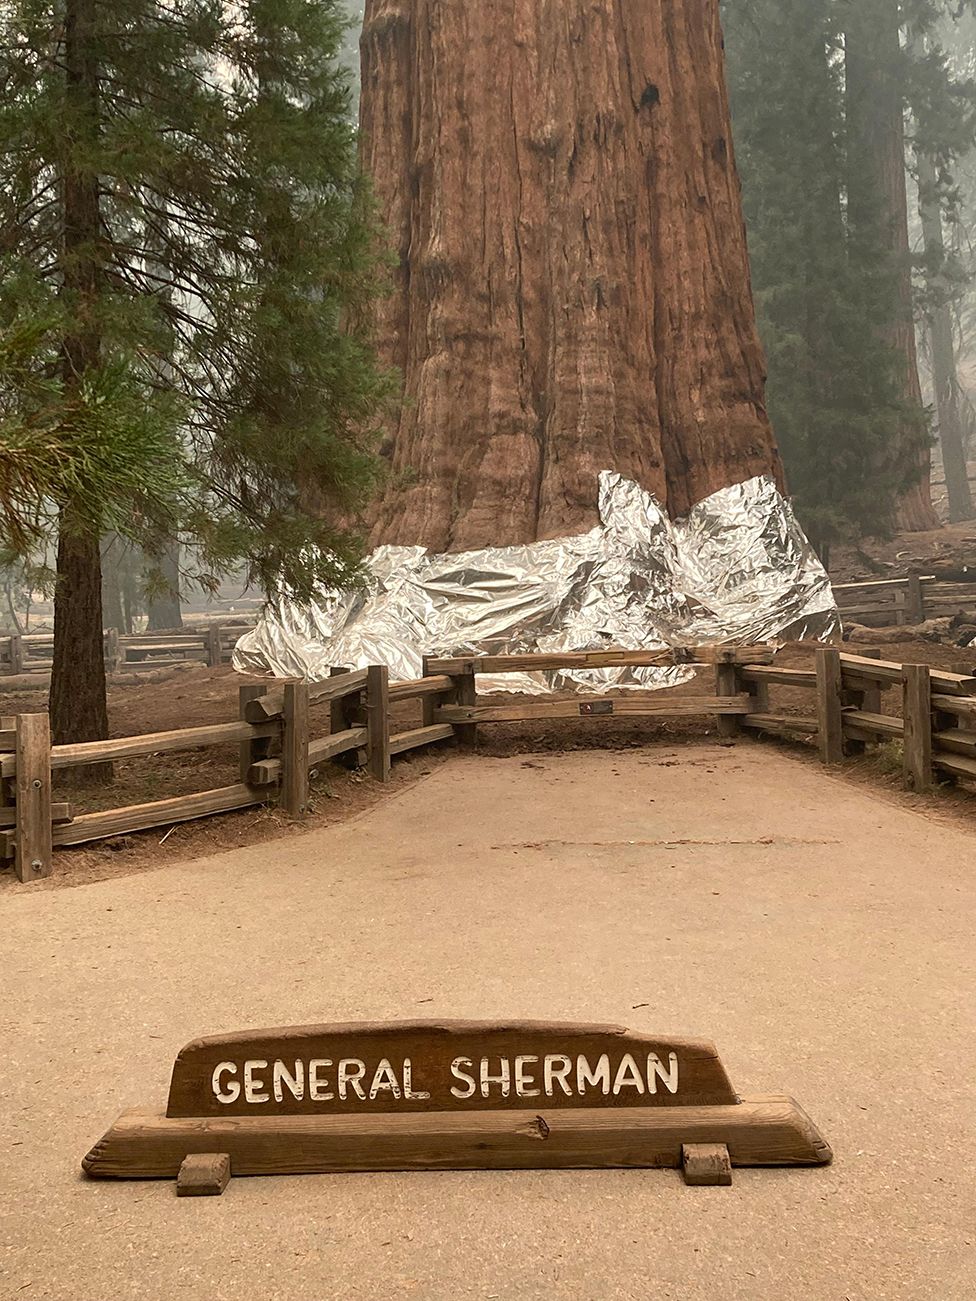 Para petugas pemadam kebakaran melindungi pohon General Sherman dari kebakaran (Dok. National Park Service)